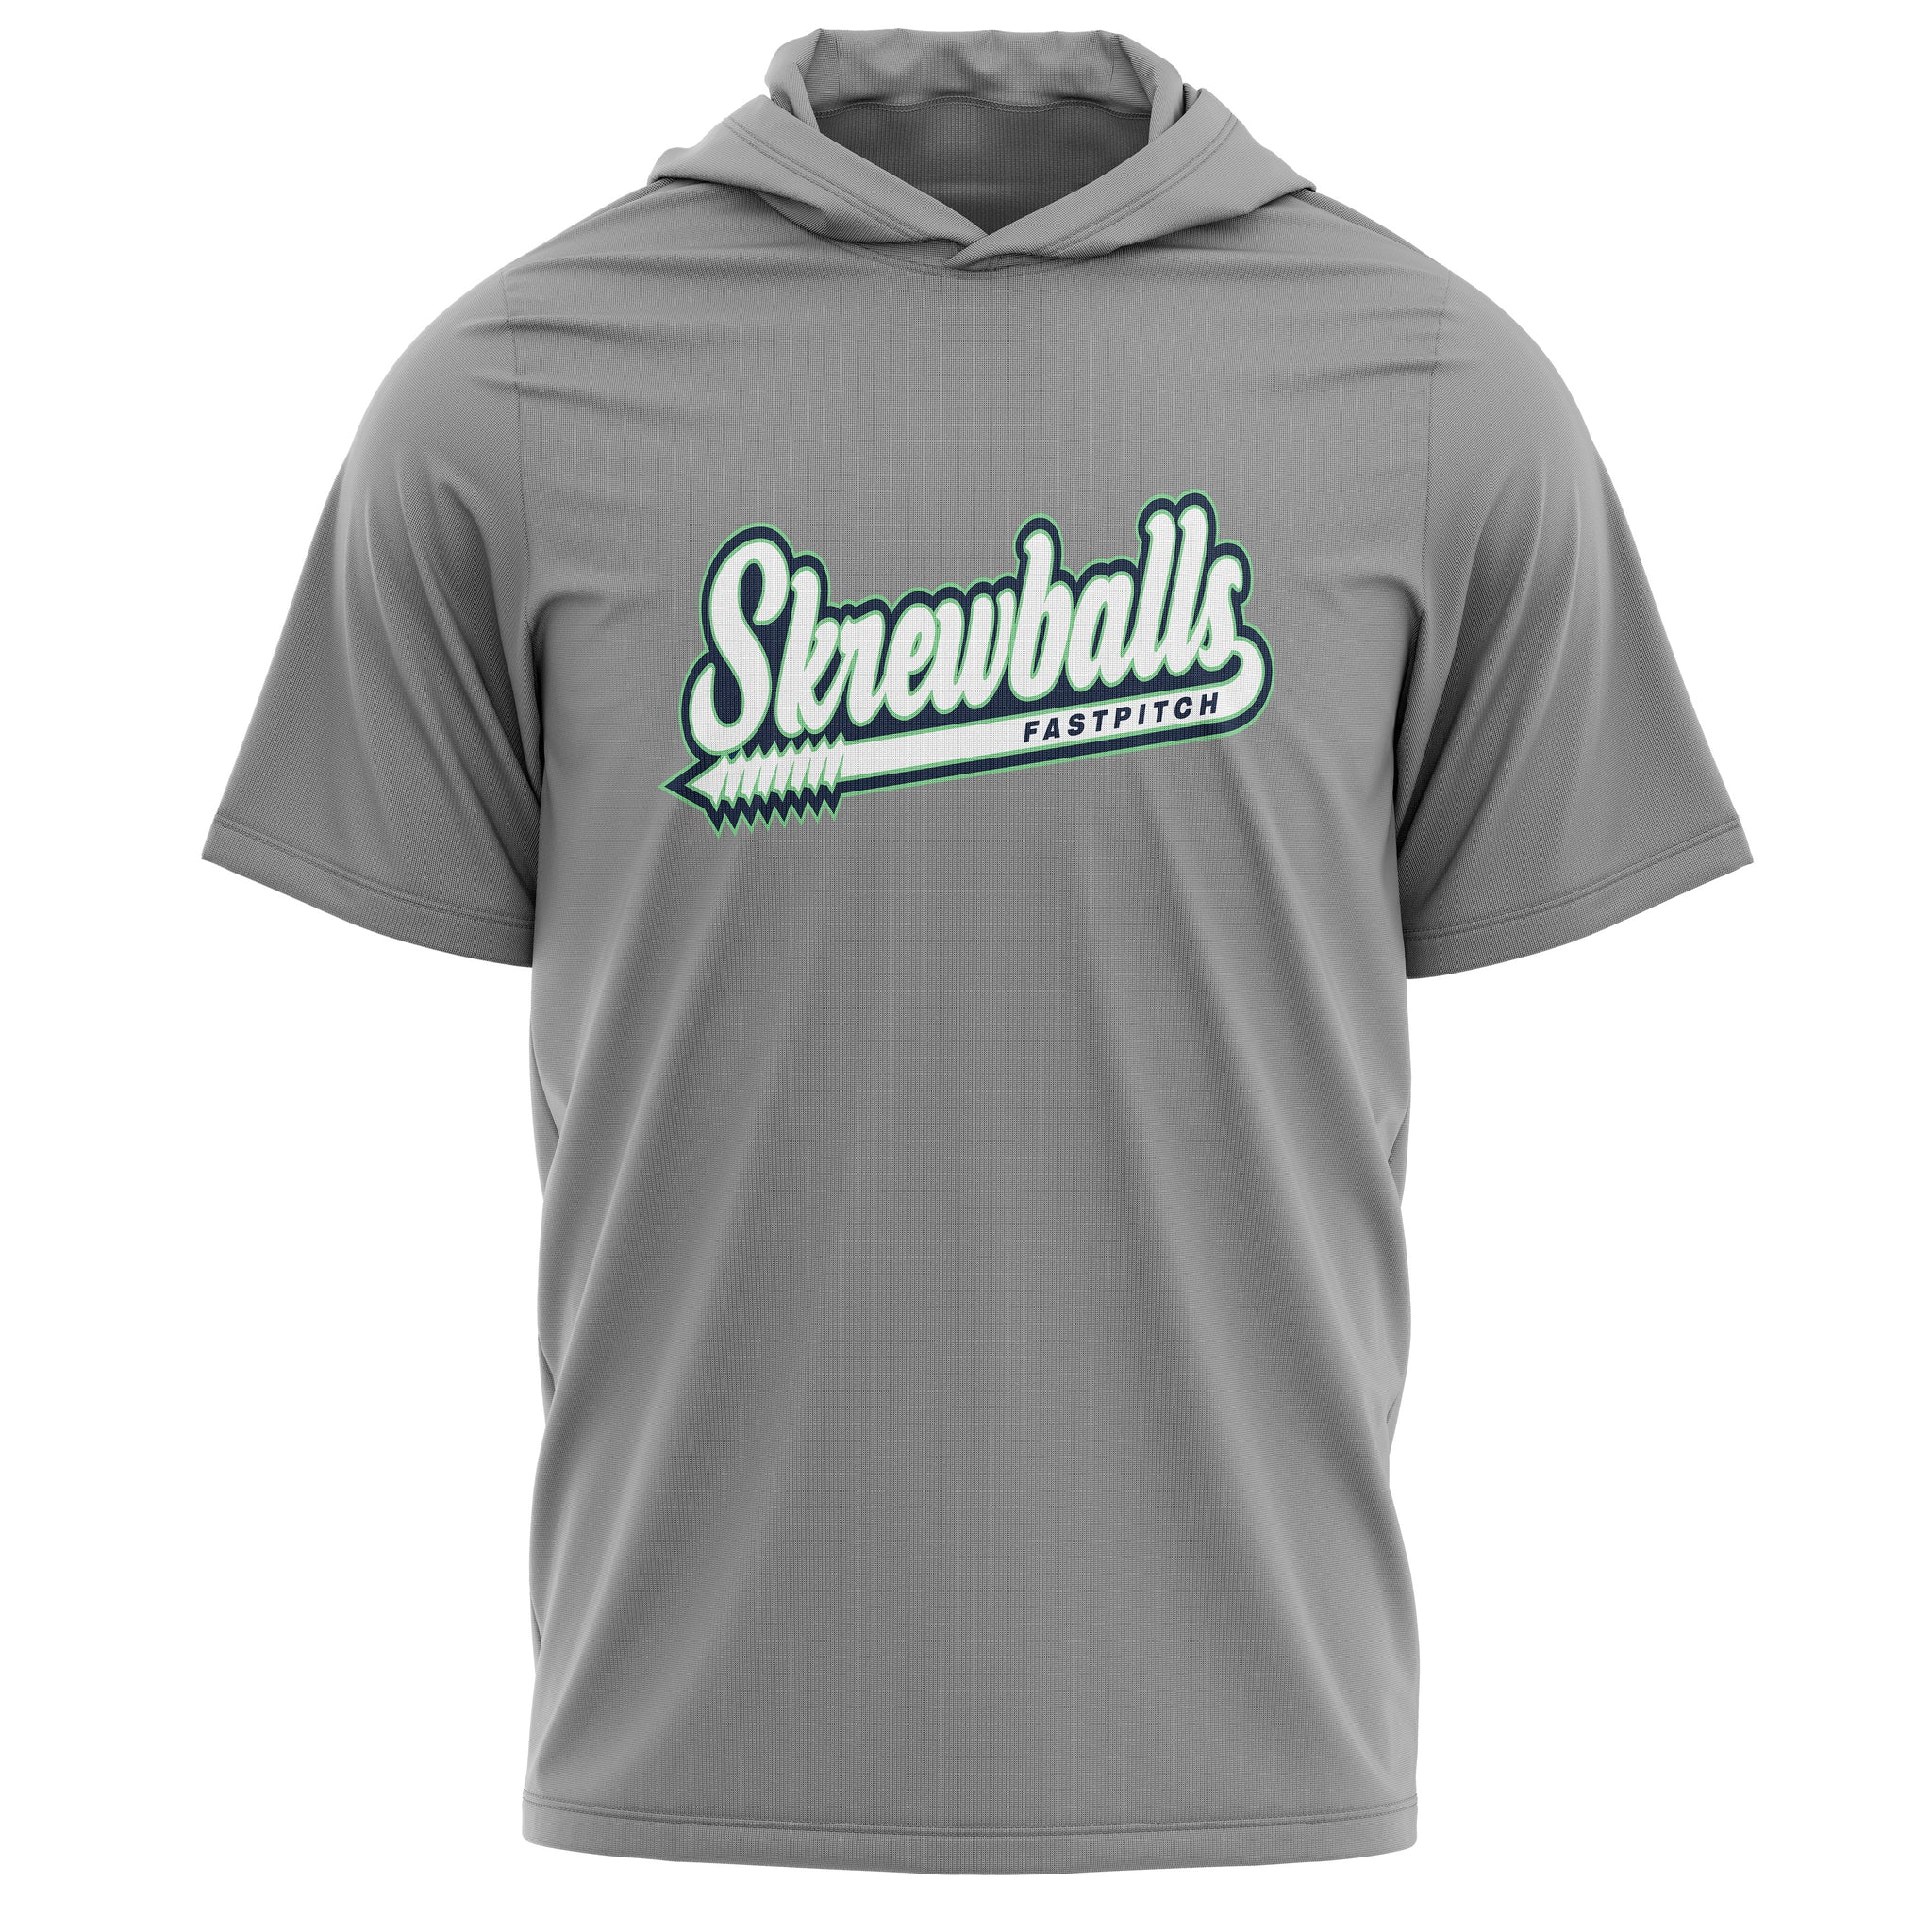 SKREWBALLS FASTPITCH Sport-Tek ® PosiCharge ® Tri-Blend Wicking Short Sleeve Hoodie